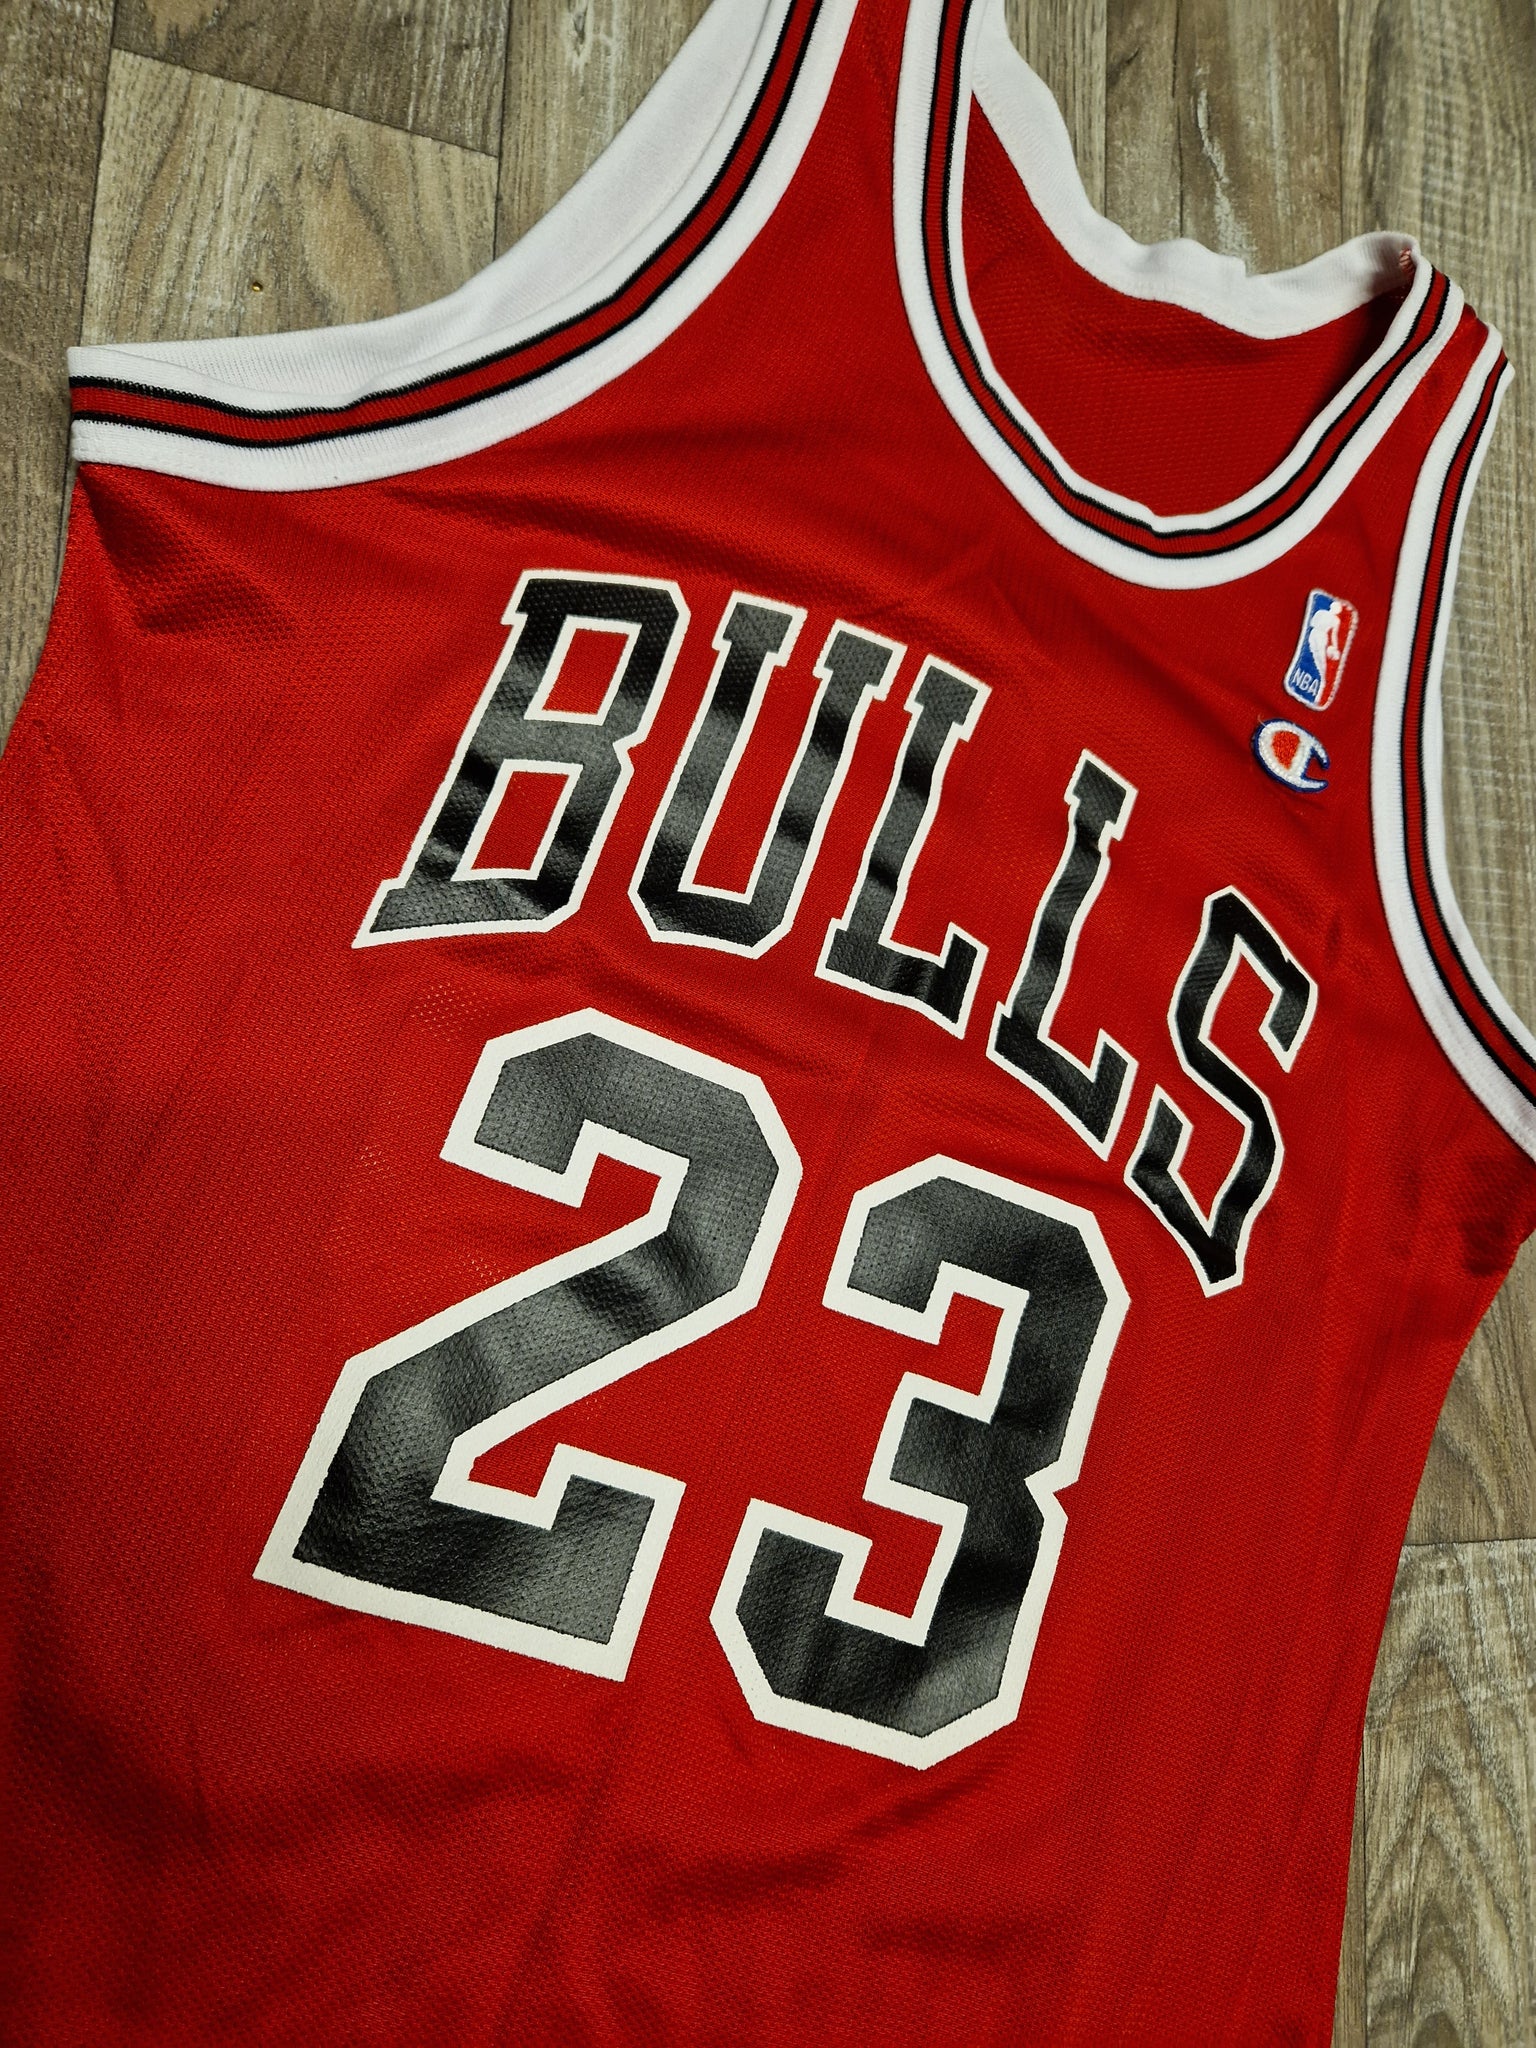 🏀 Michael Jordan Chicago Bulls Jersey Size Medium – The Throwback